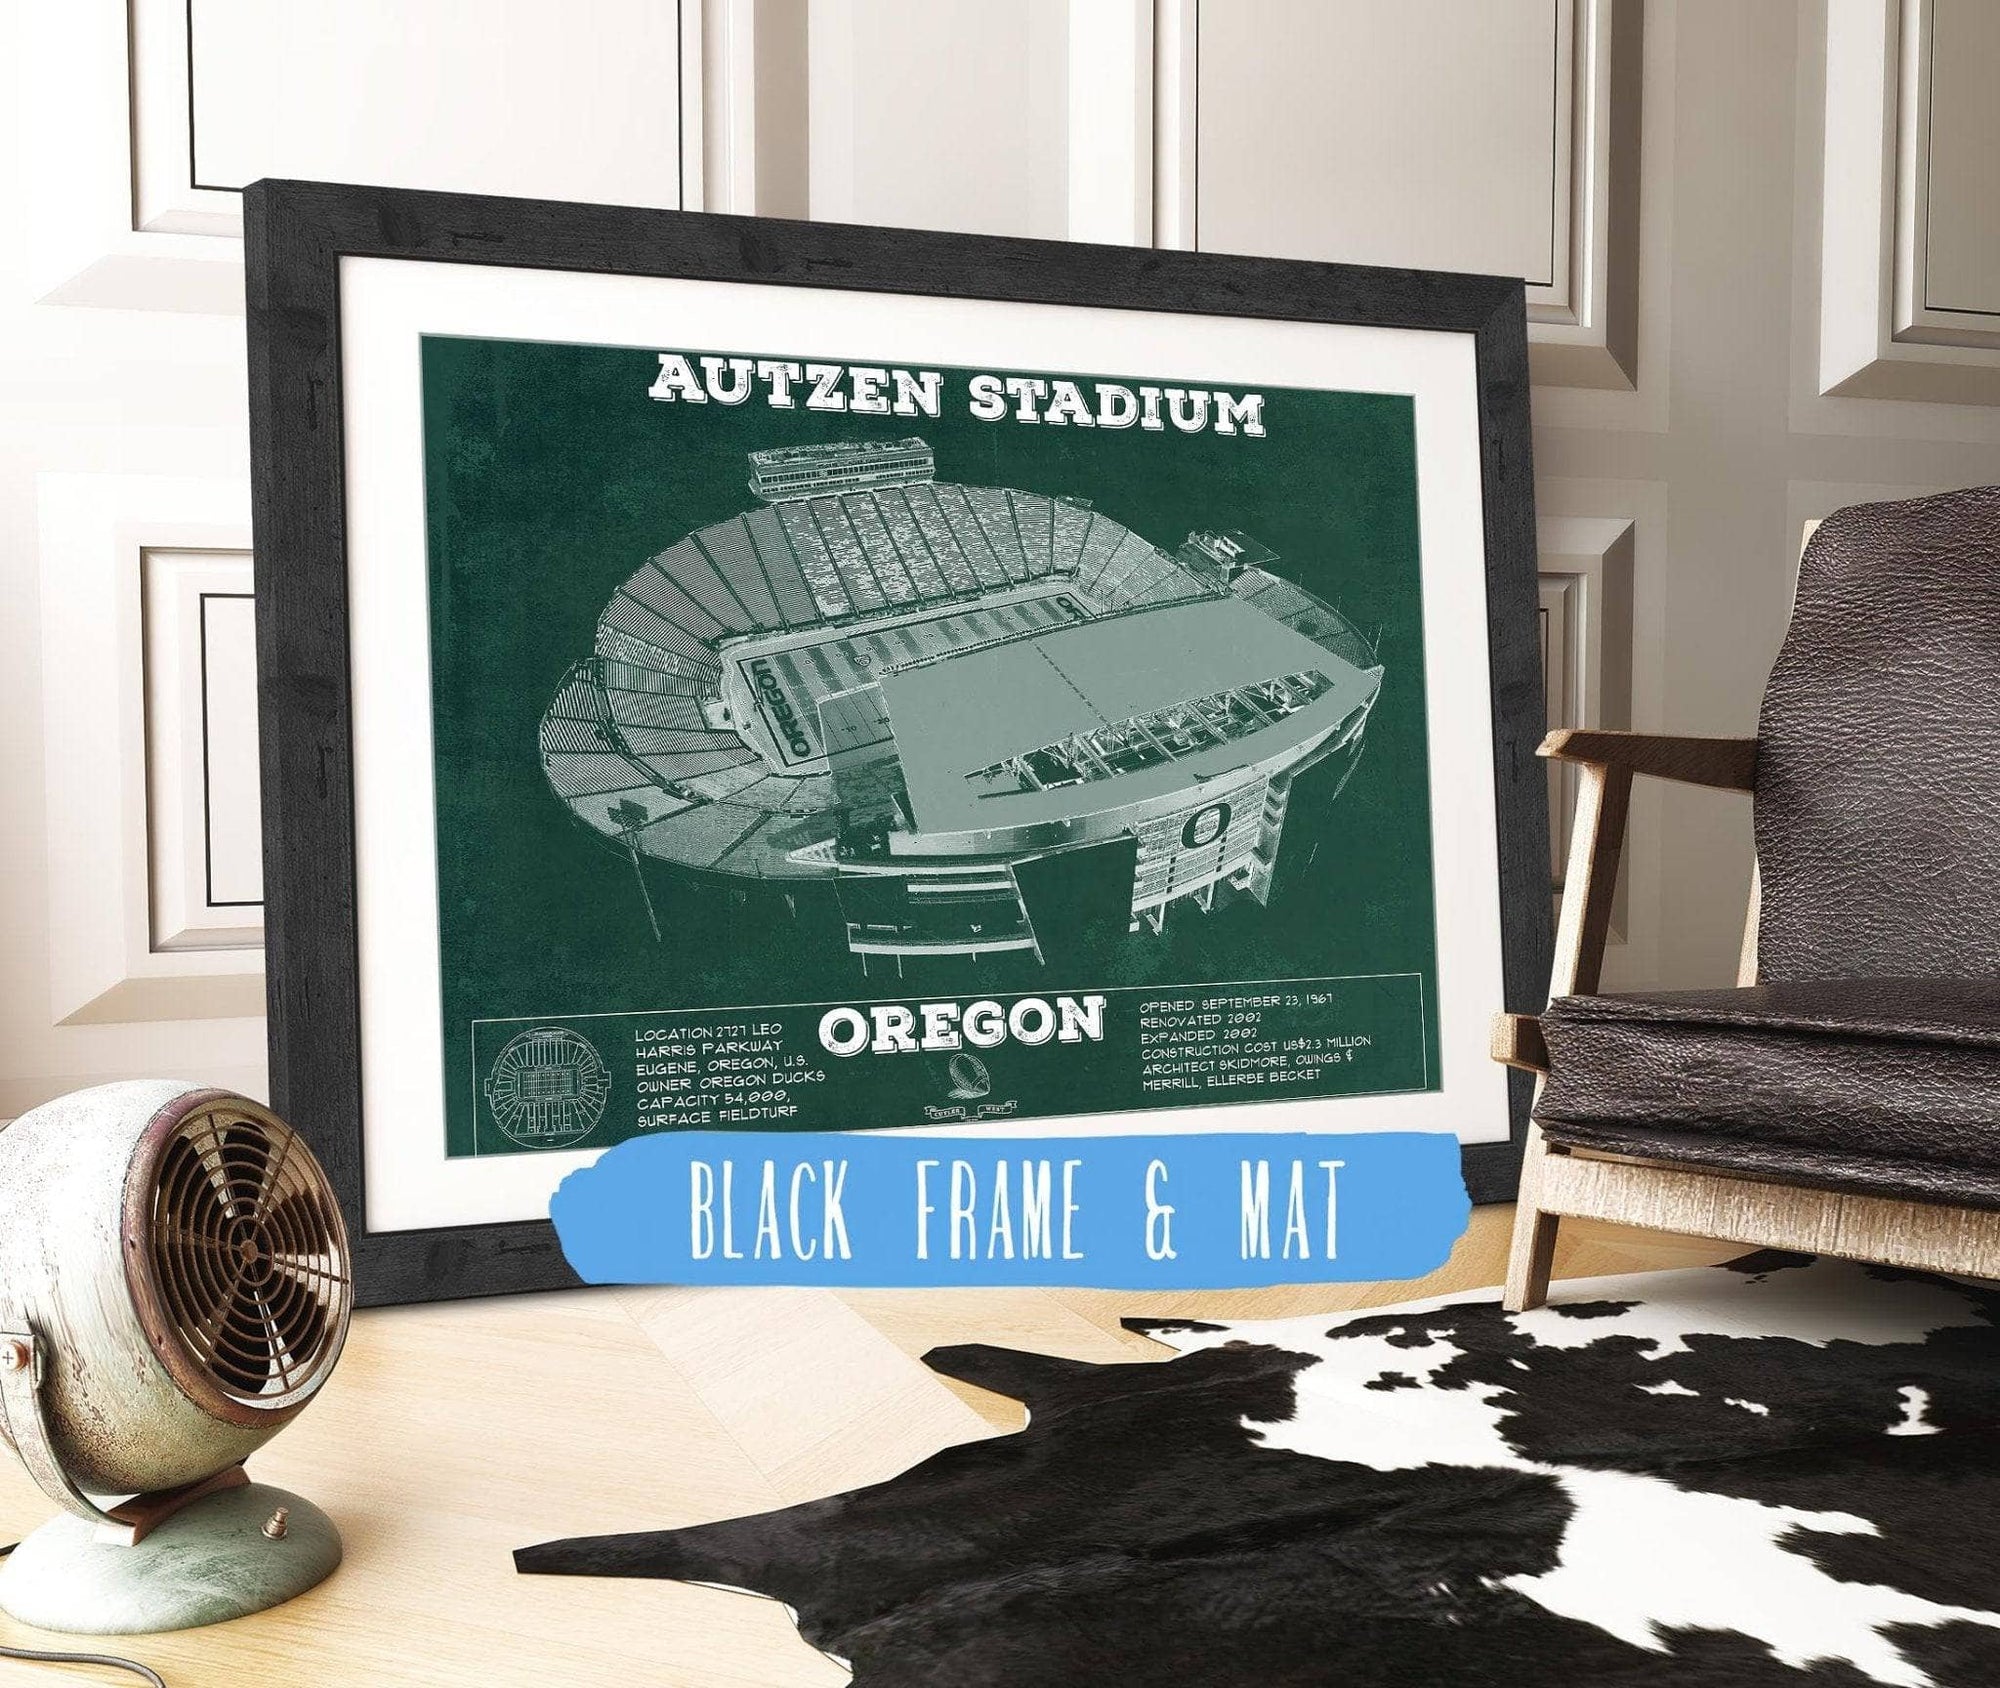 Cutler West College Football Collection 14" x 11" / Black Frame & Mat Vintage Autzen Stadium - Oregon Ducks Football Print 718616953-14"-x-11"35737